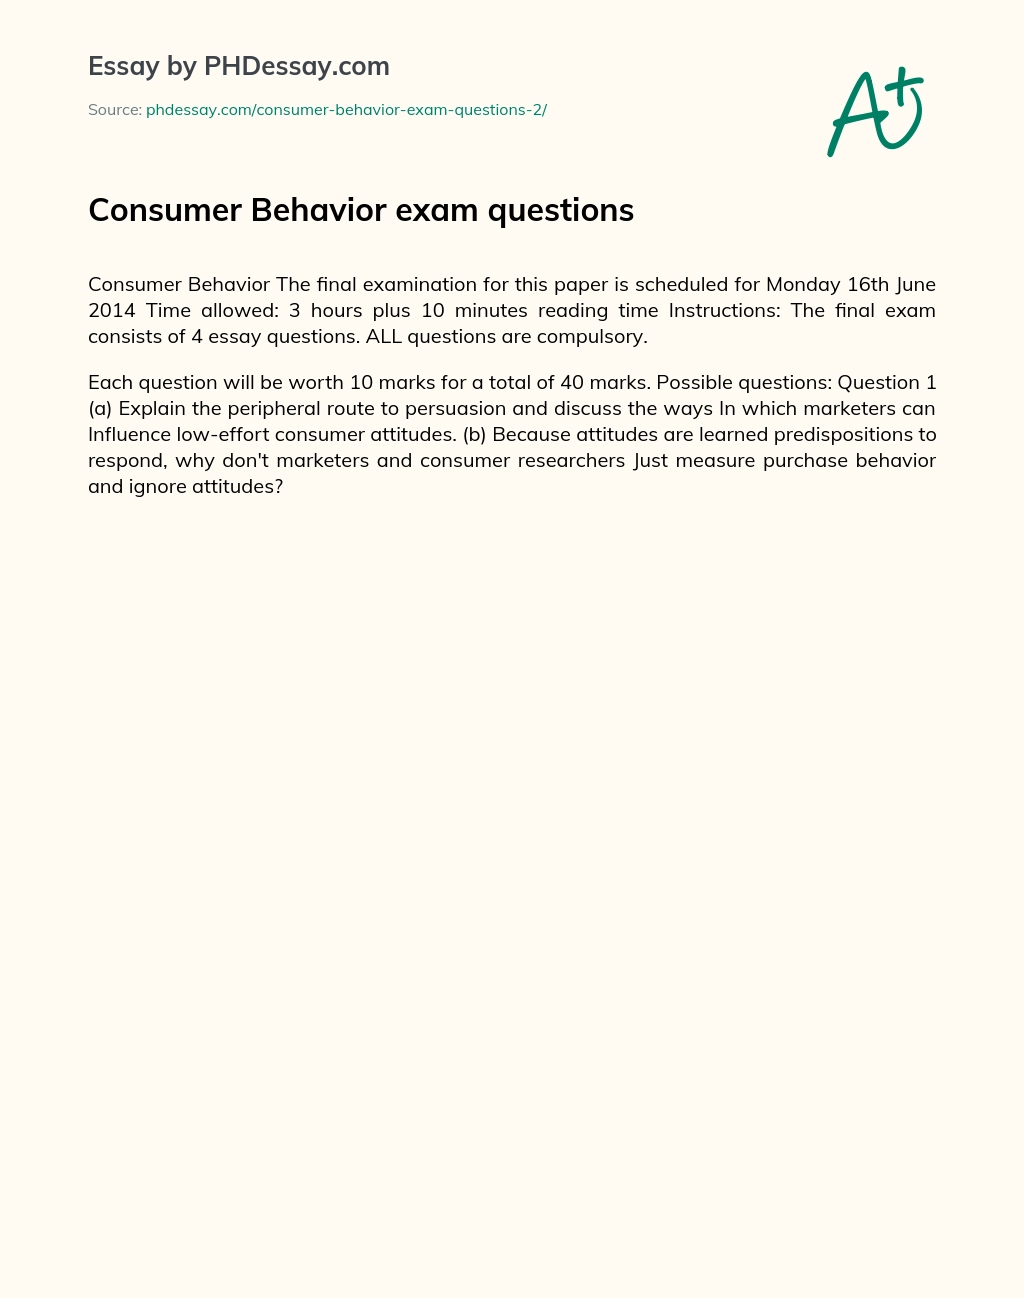 Consumer Behavior exam questions essay